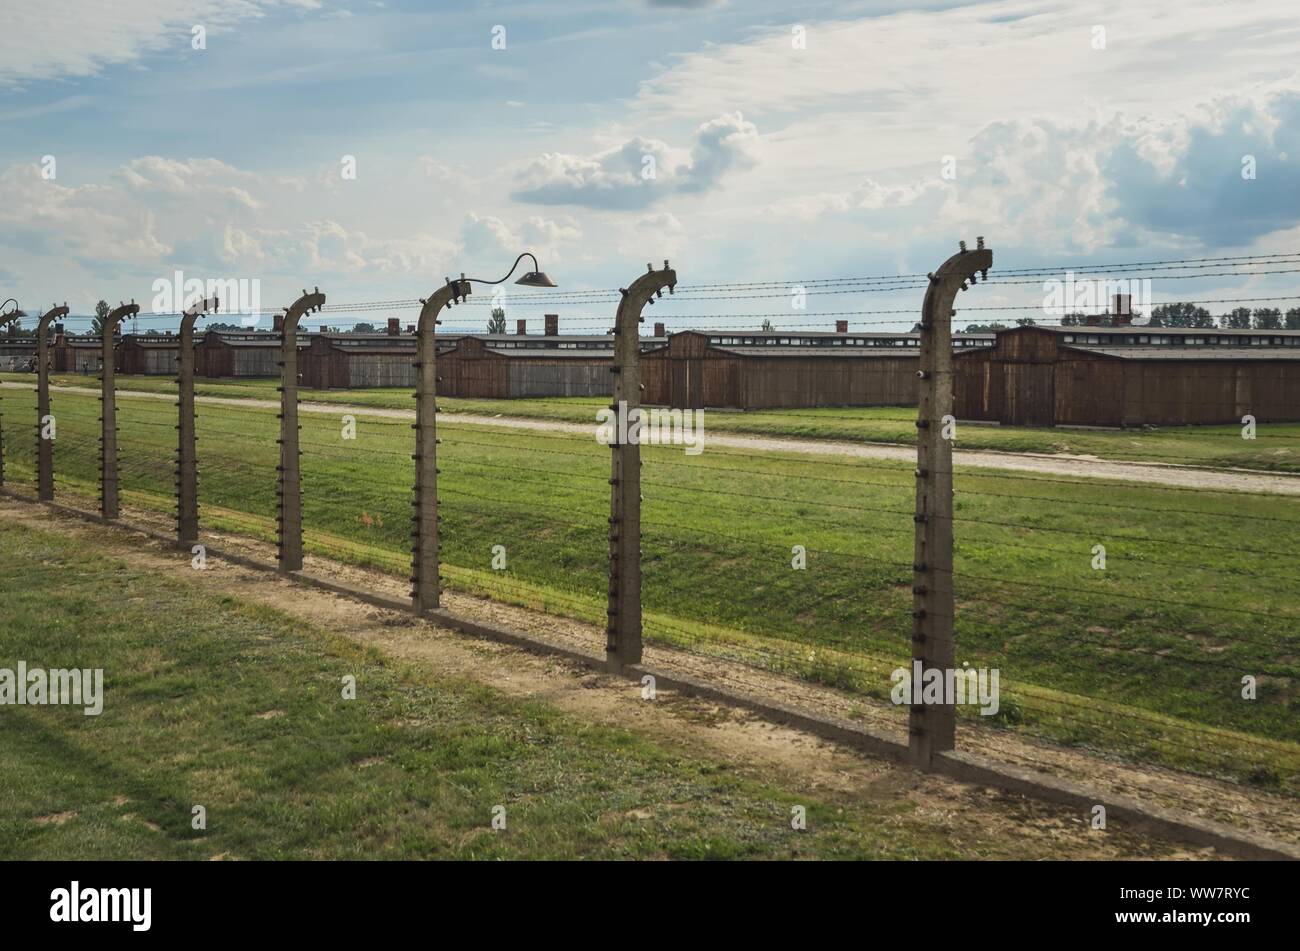 OSWIECIM, POLAND - AUGUST 17, 2019: Buildings in the concentration camp Auschwitz Birkenau in Oswiecim, Poland. Stock Photo